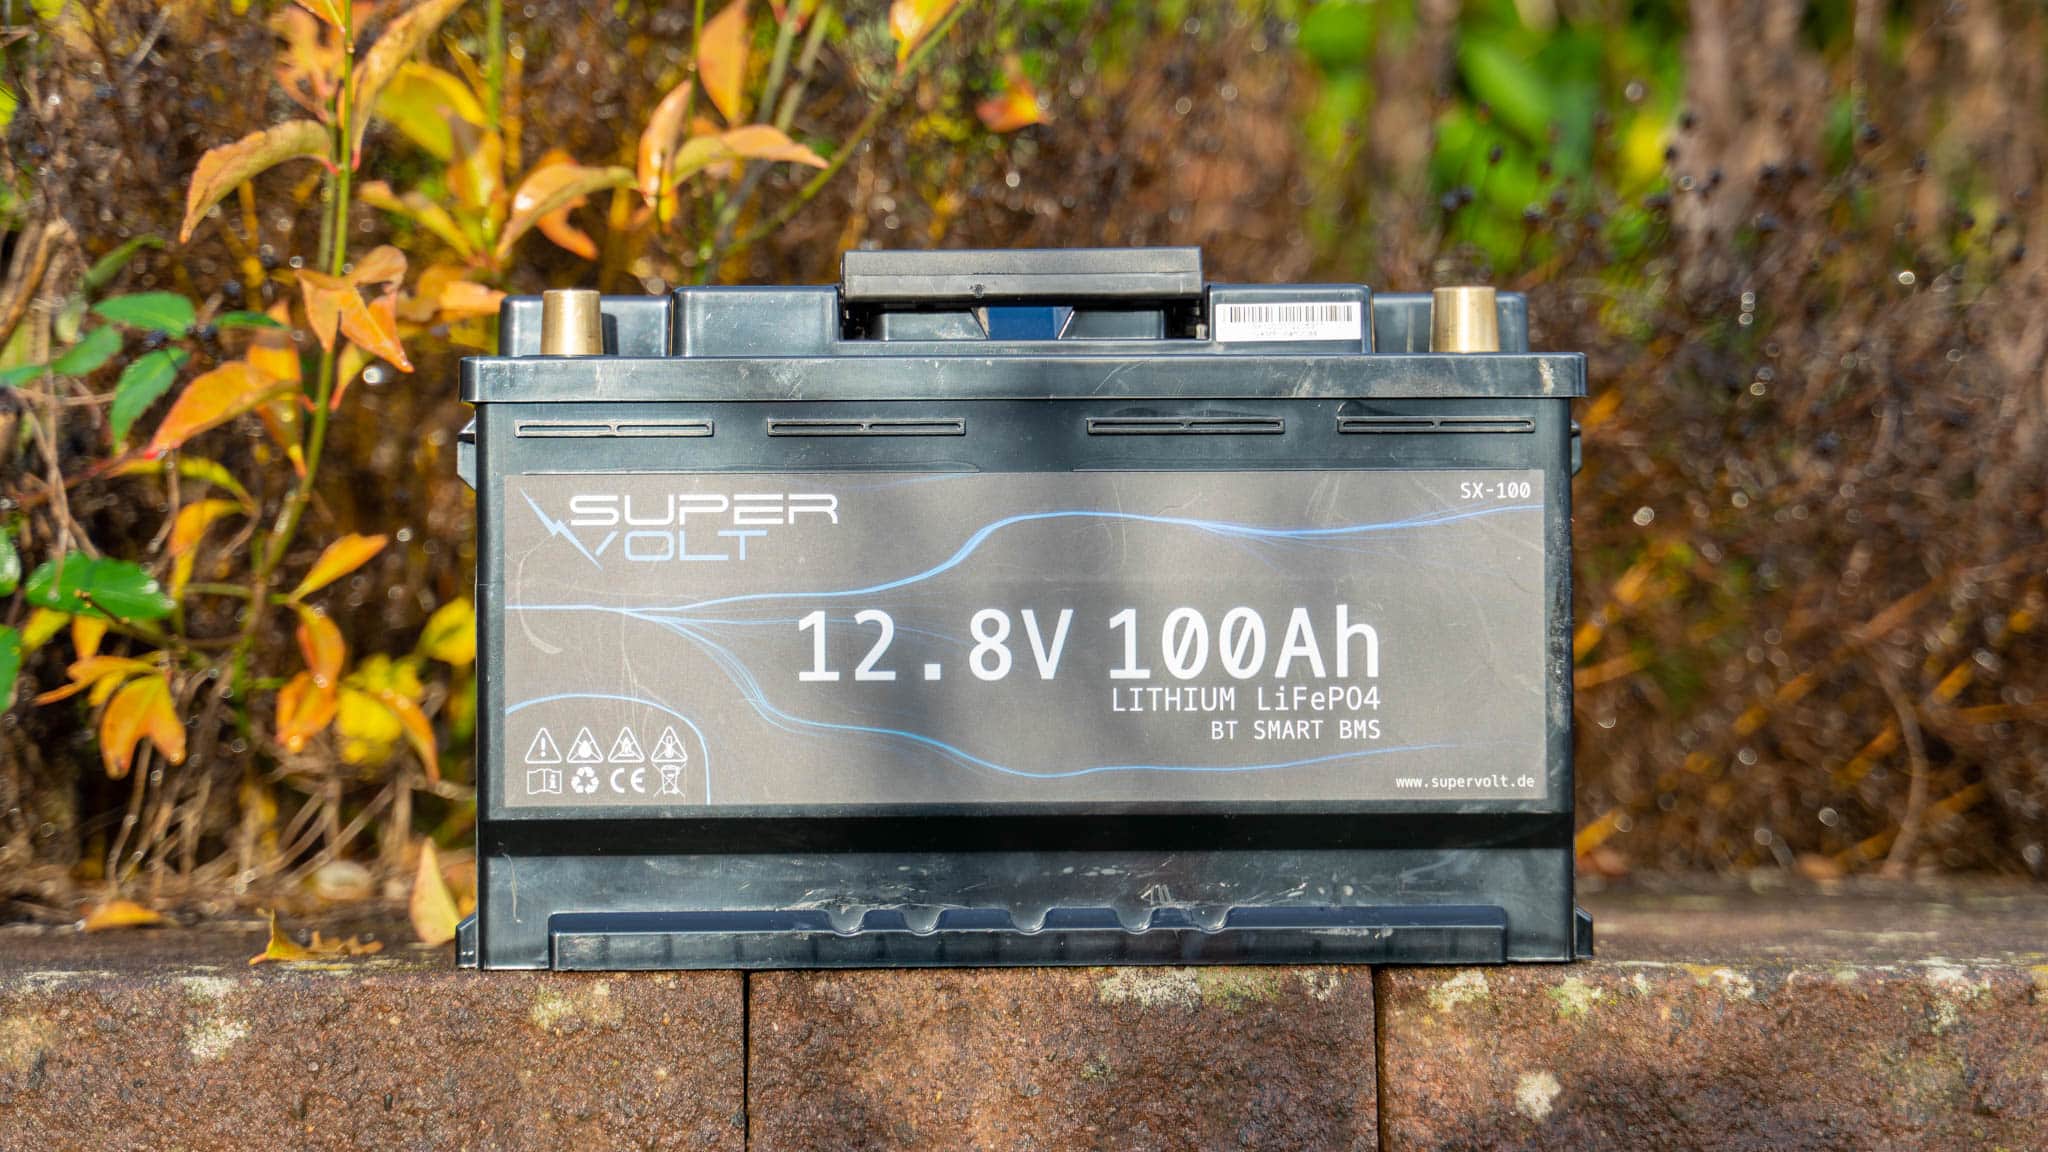 SANFOU 12.8 V 100 Ah LiFePO4 Battery Pack 4